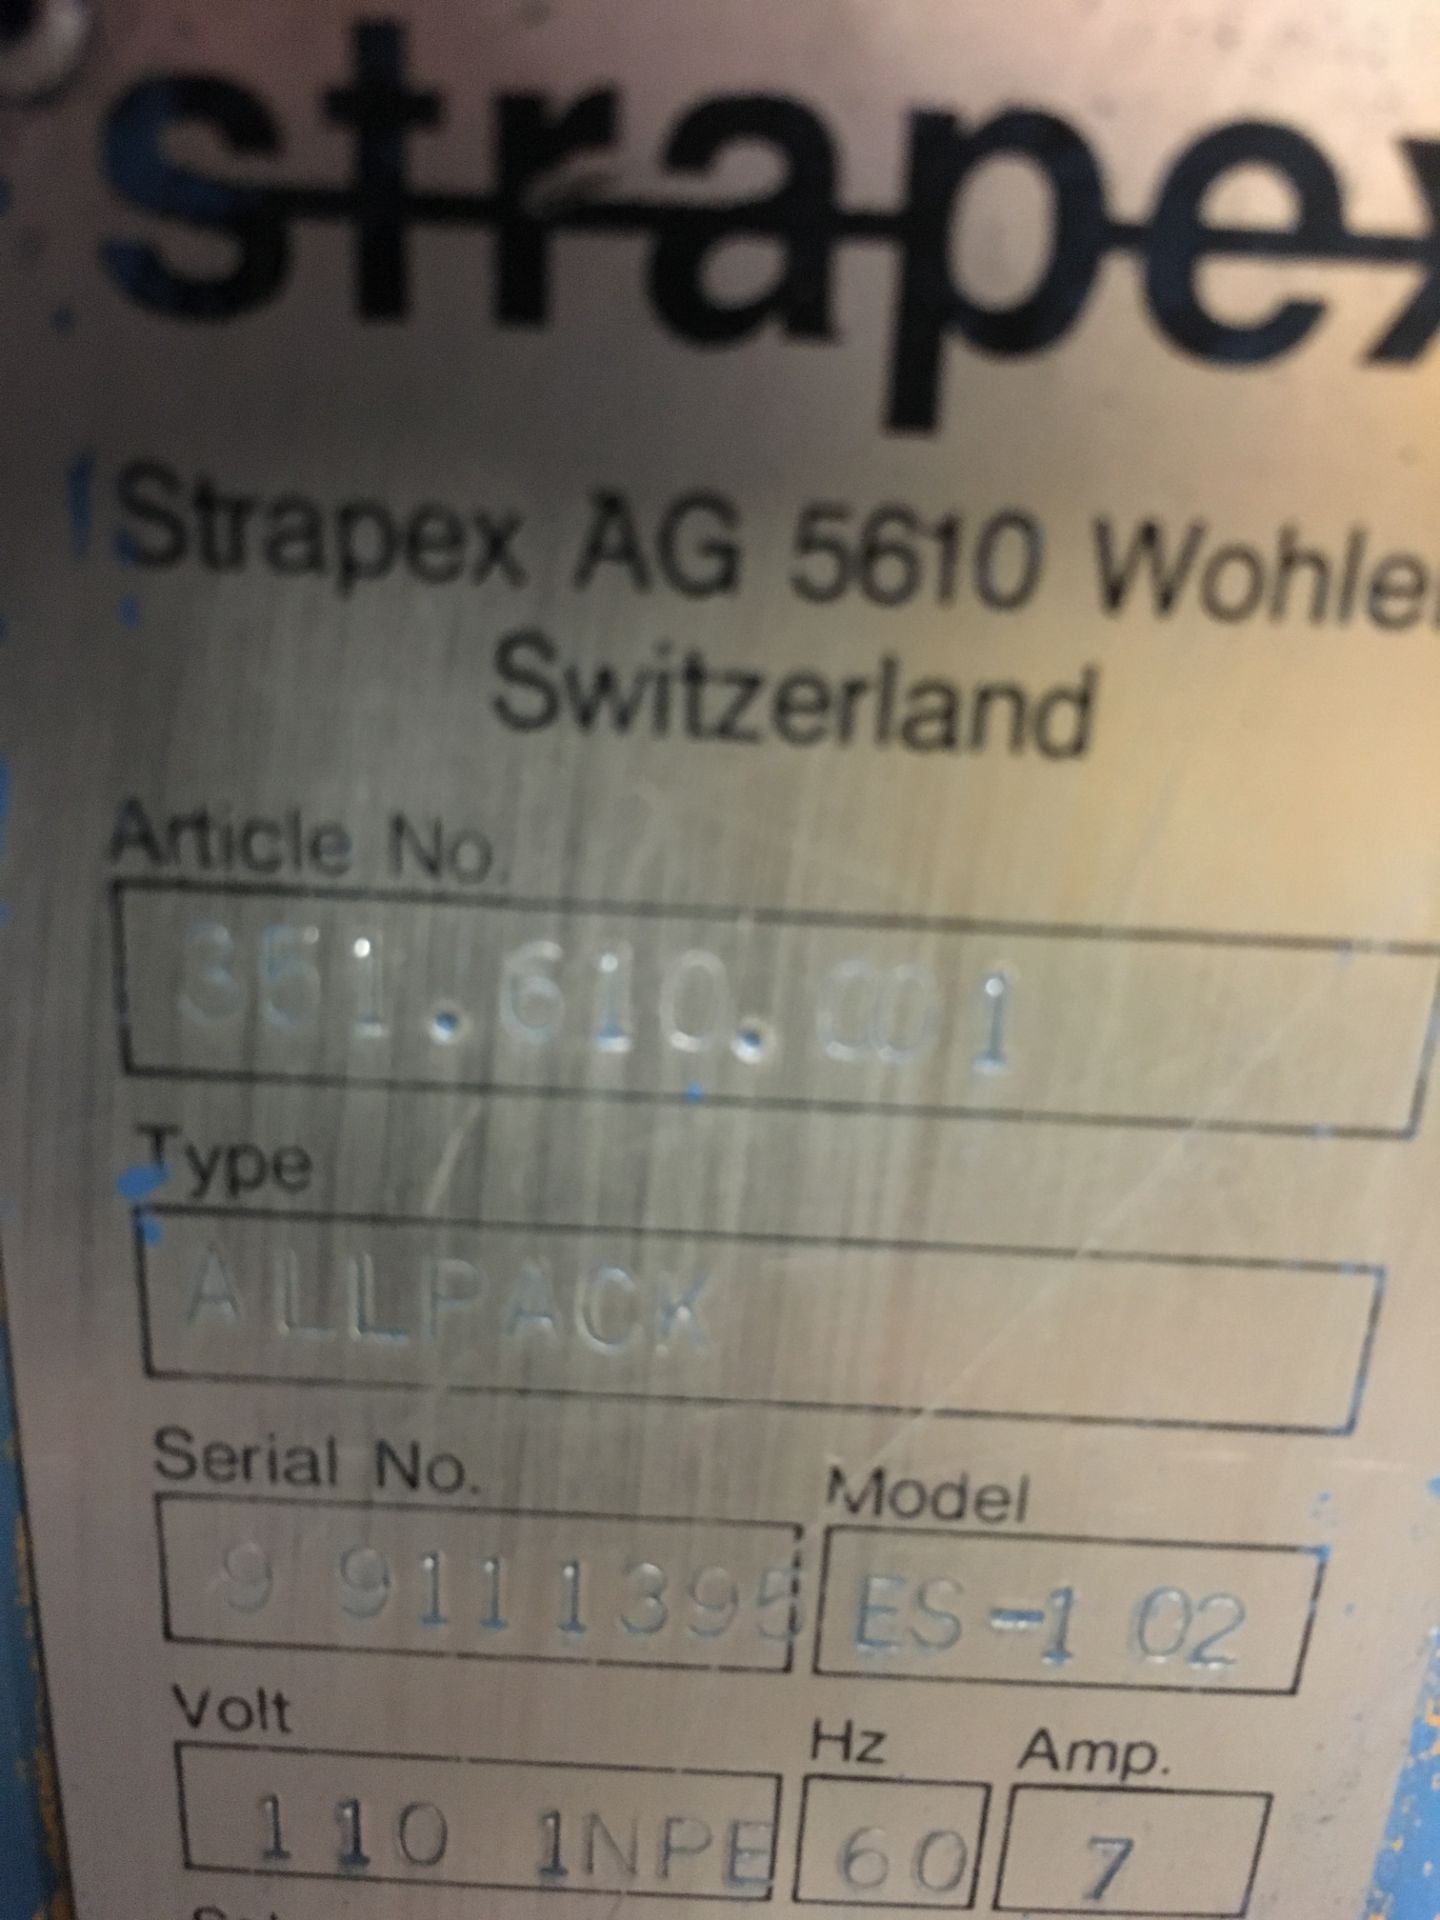 Strapex Model ES-102 Automatic Bander - Image 2 of 2